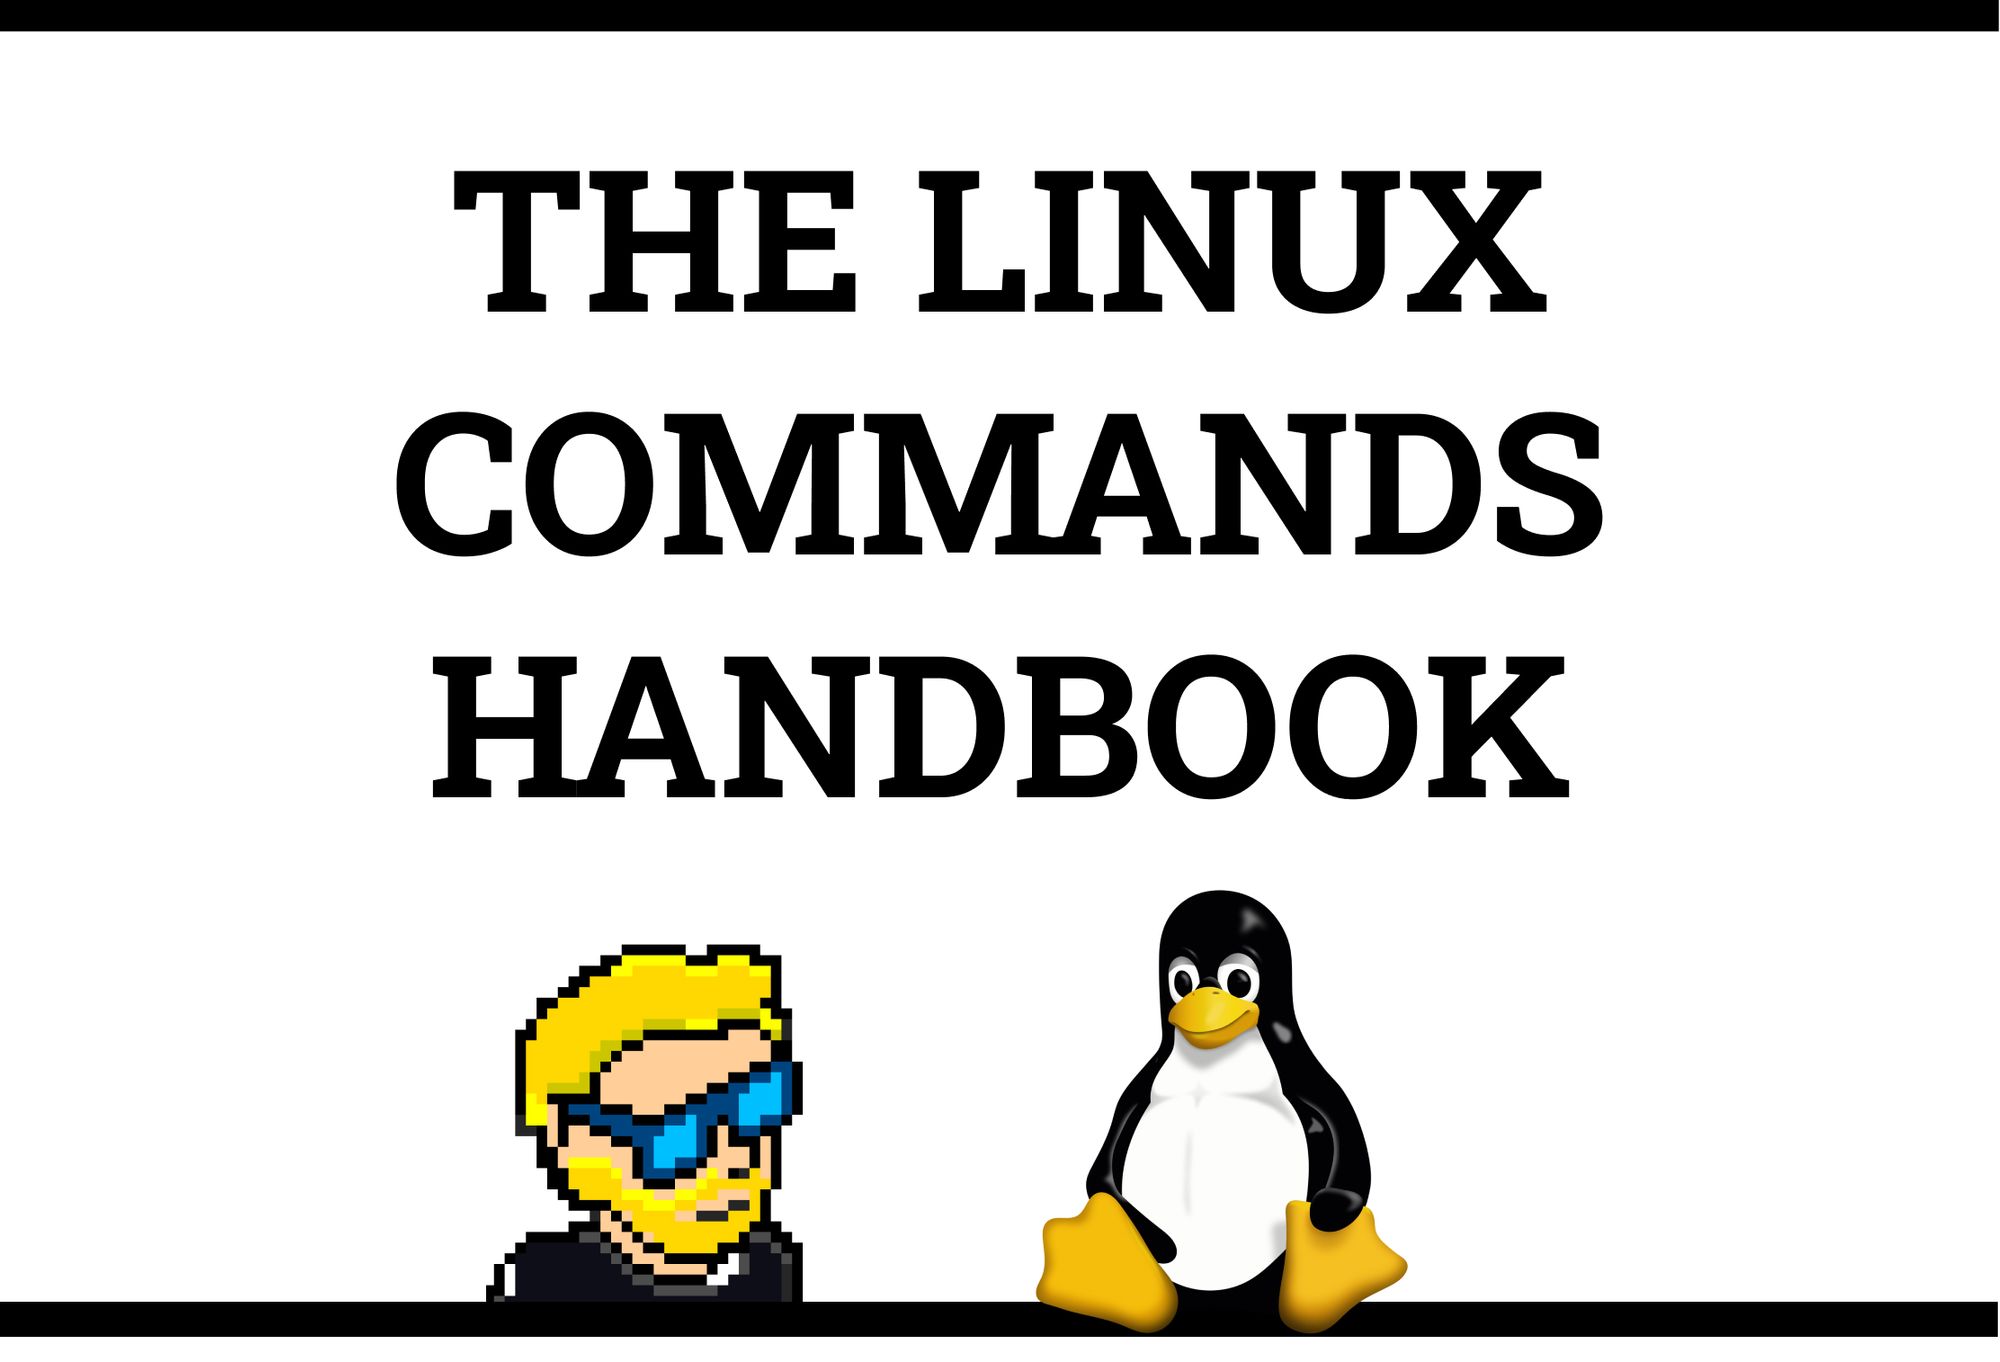 The Linux Commands Handbook